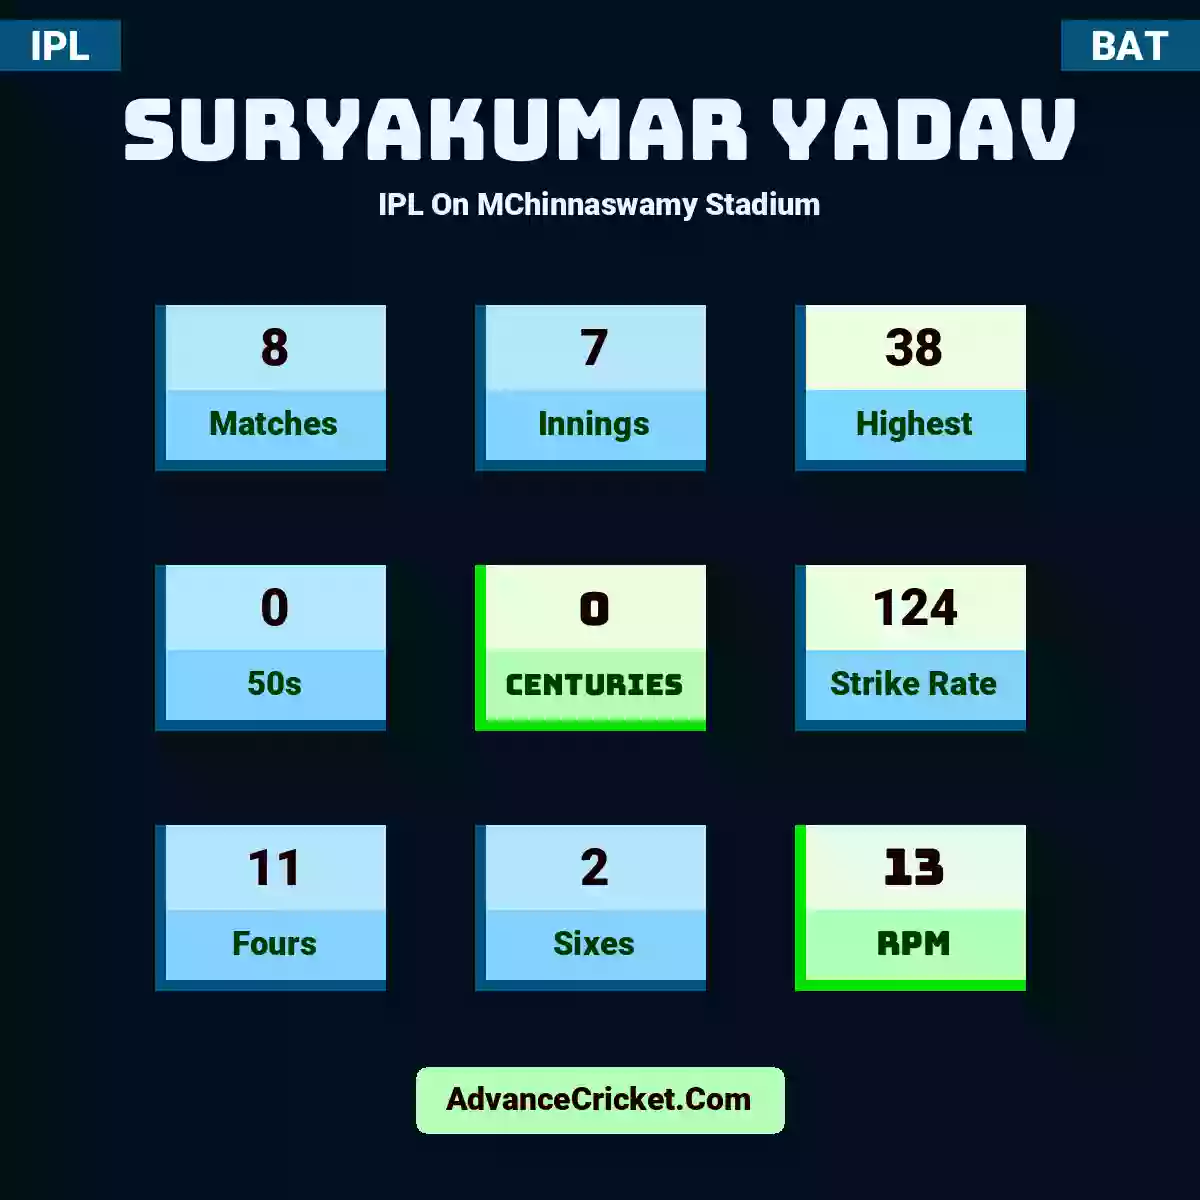 Suryakumar Yadav IPL  On MChinnaswamy Stadium, Suryakumar Yadav played 8 matches, scored 38 runs as highest, 0 half-centuries, and 0 centuries, with a strike rate of 124. S.Yadav hit 11 fours and 2 sixes, with an RPM of 13.